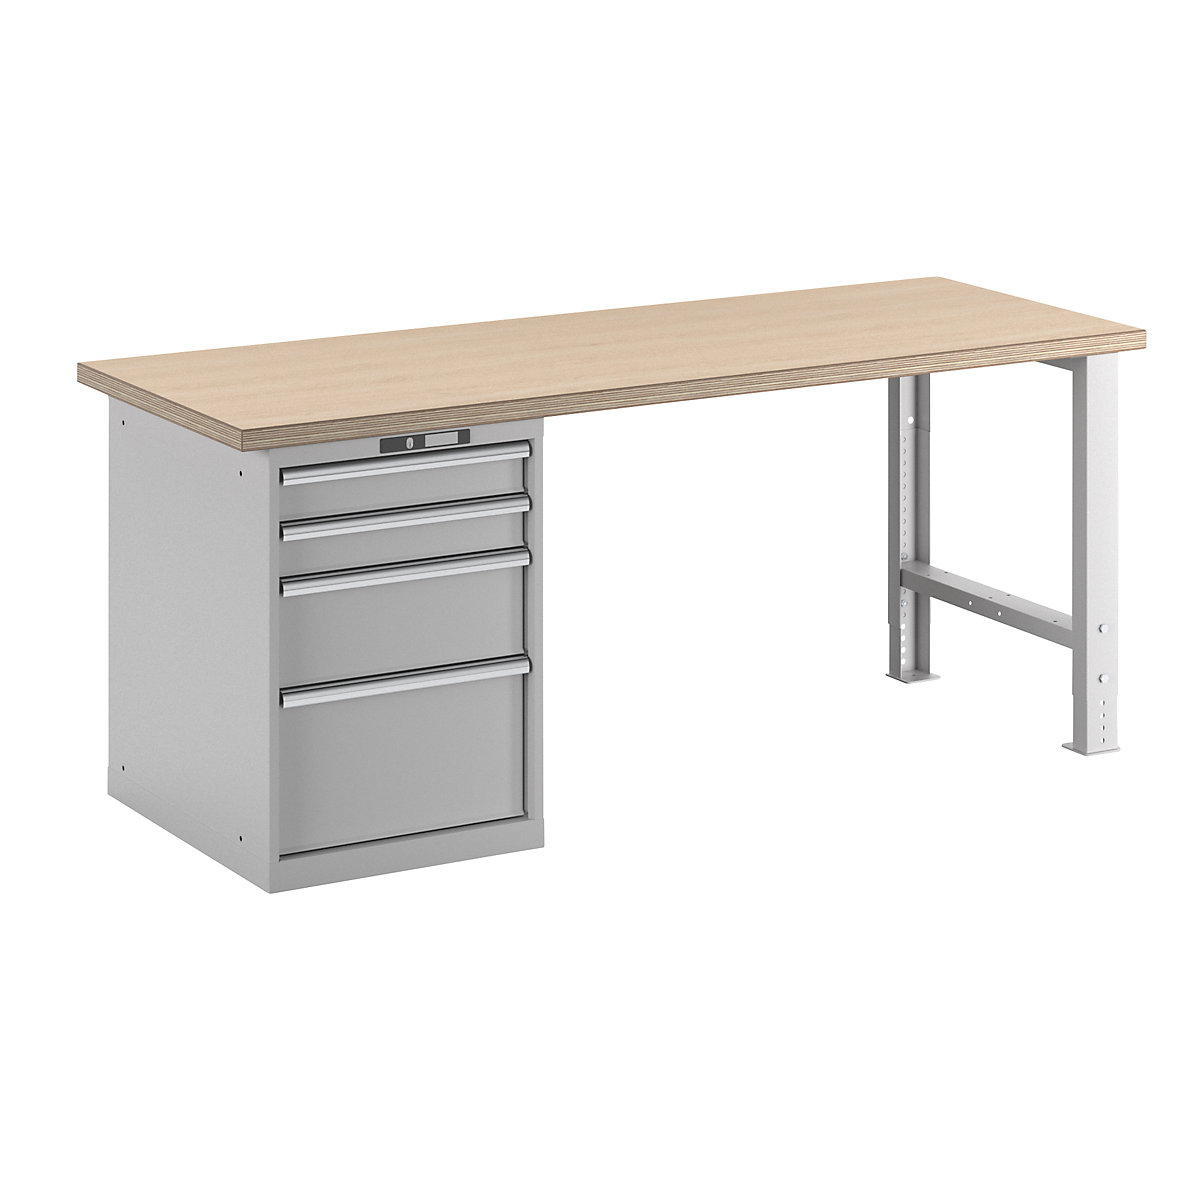 Modular workbench – LISTA, height 840 mm, pedestal drawer unit, 4 drawers, light grey, table width 2000 mm-11